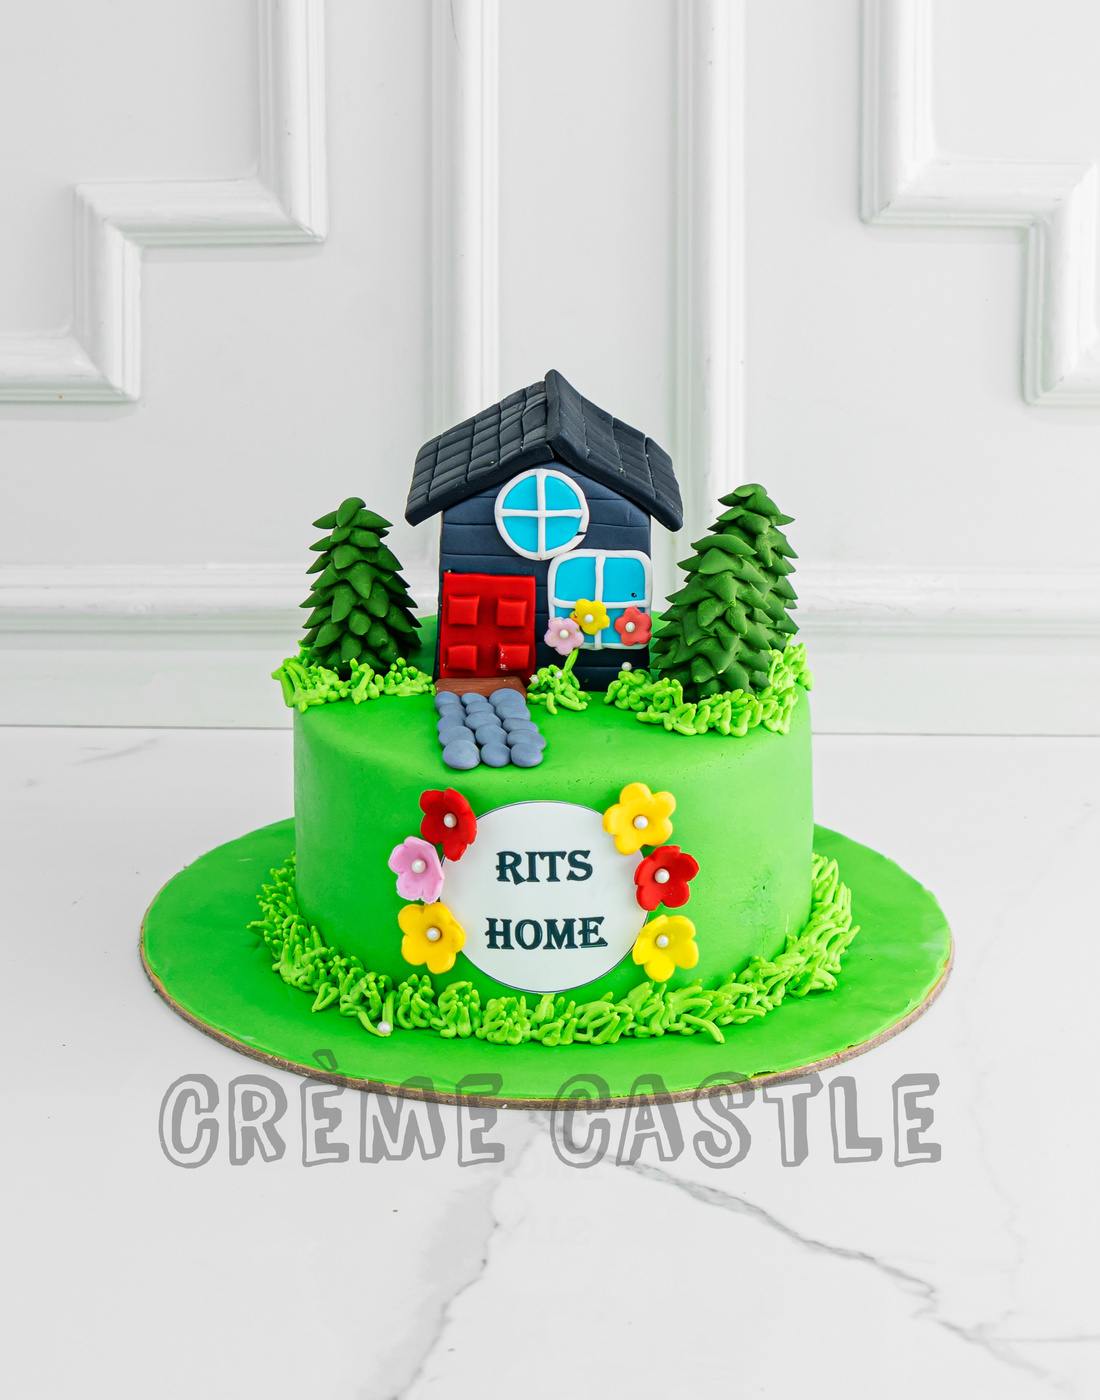 Houses / Buildings | Building cake, House cake, Housewarming cake